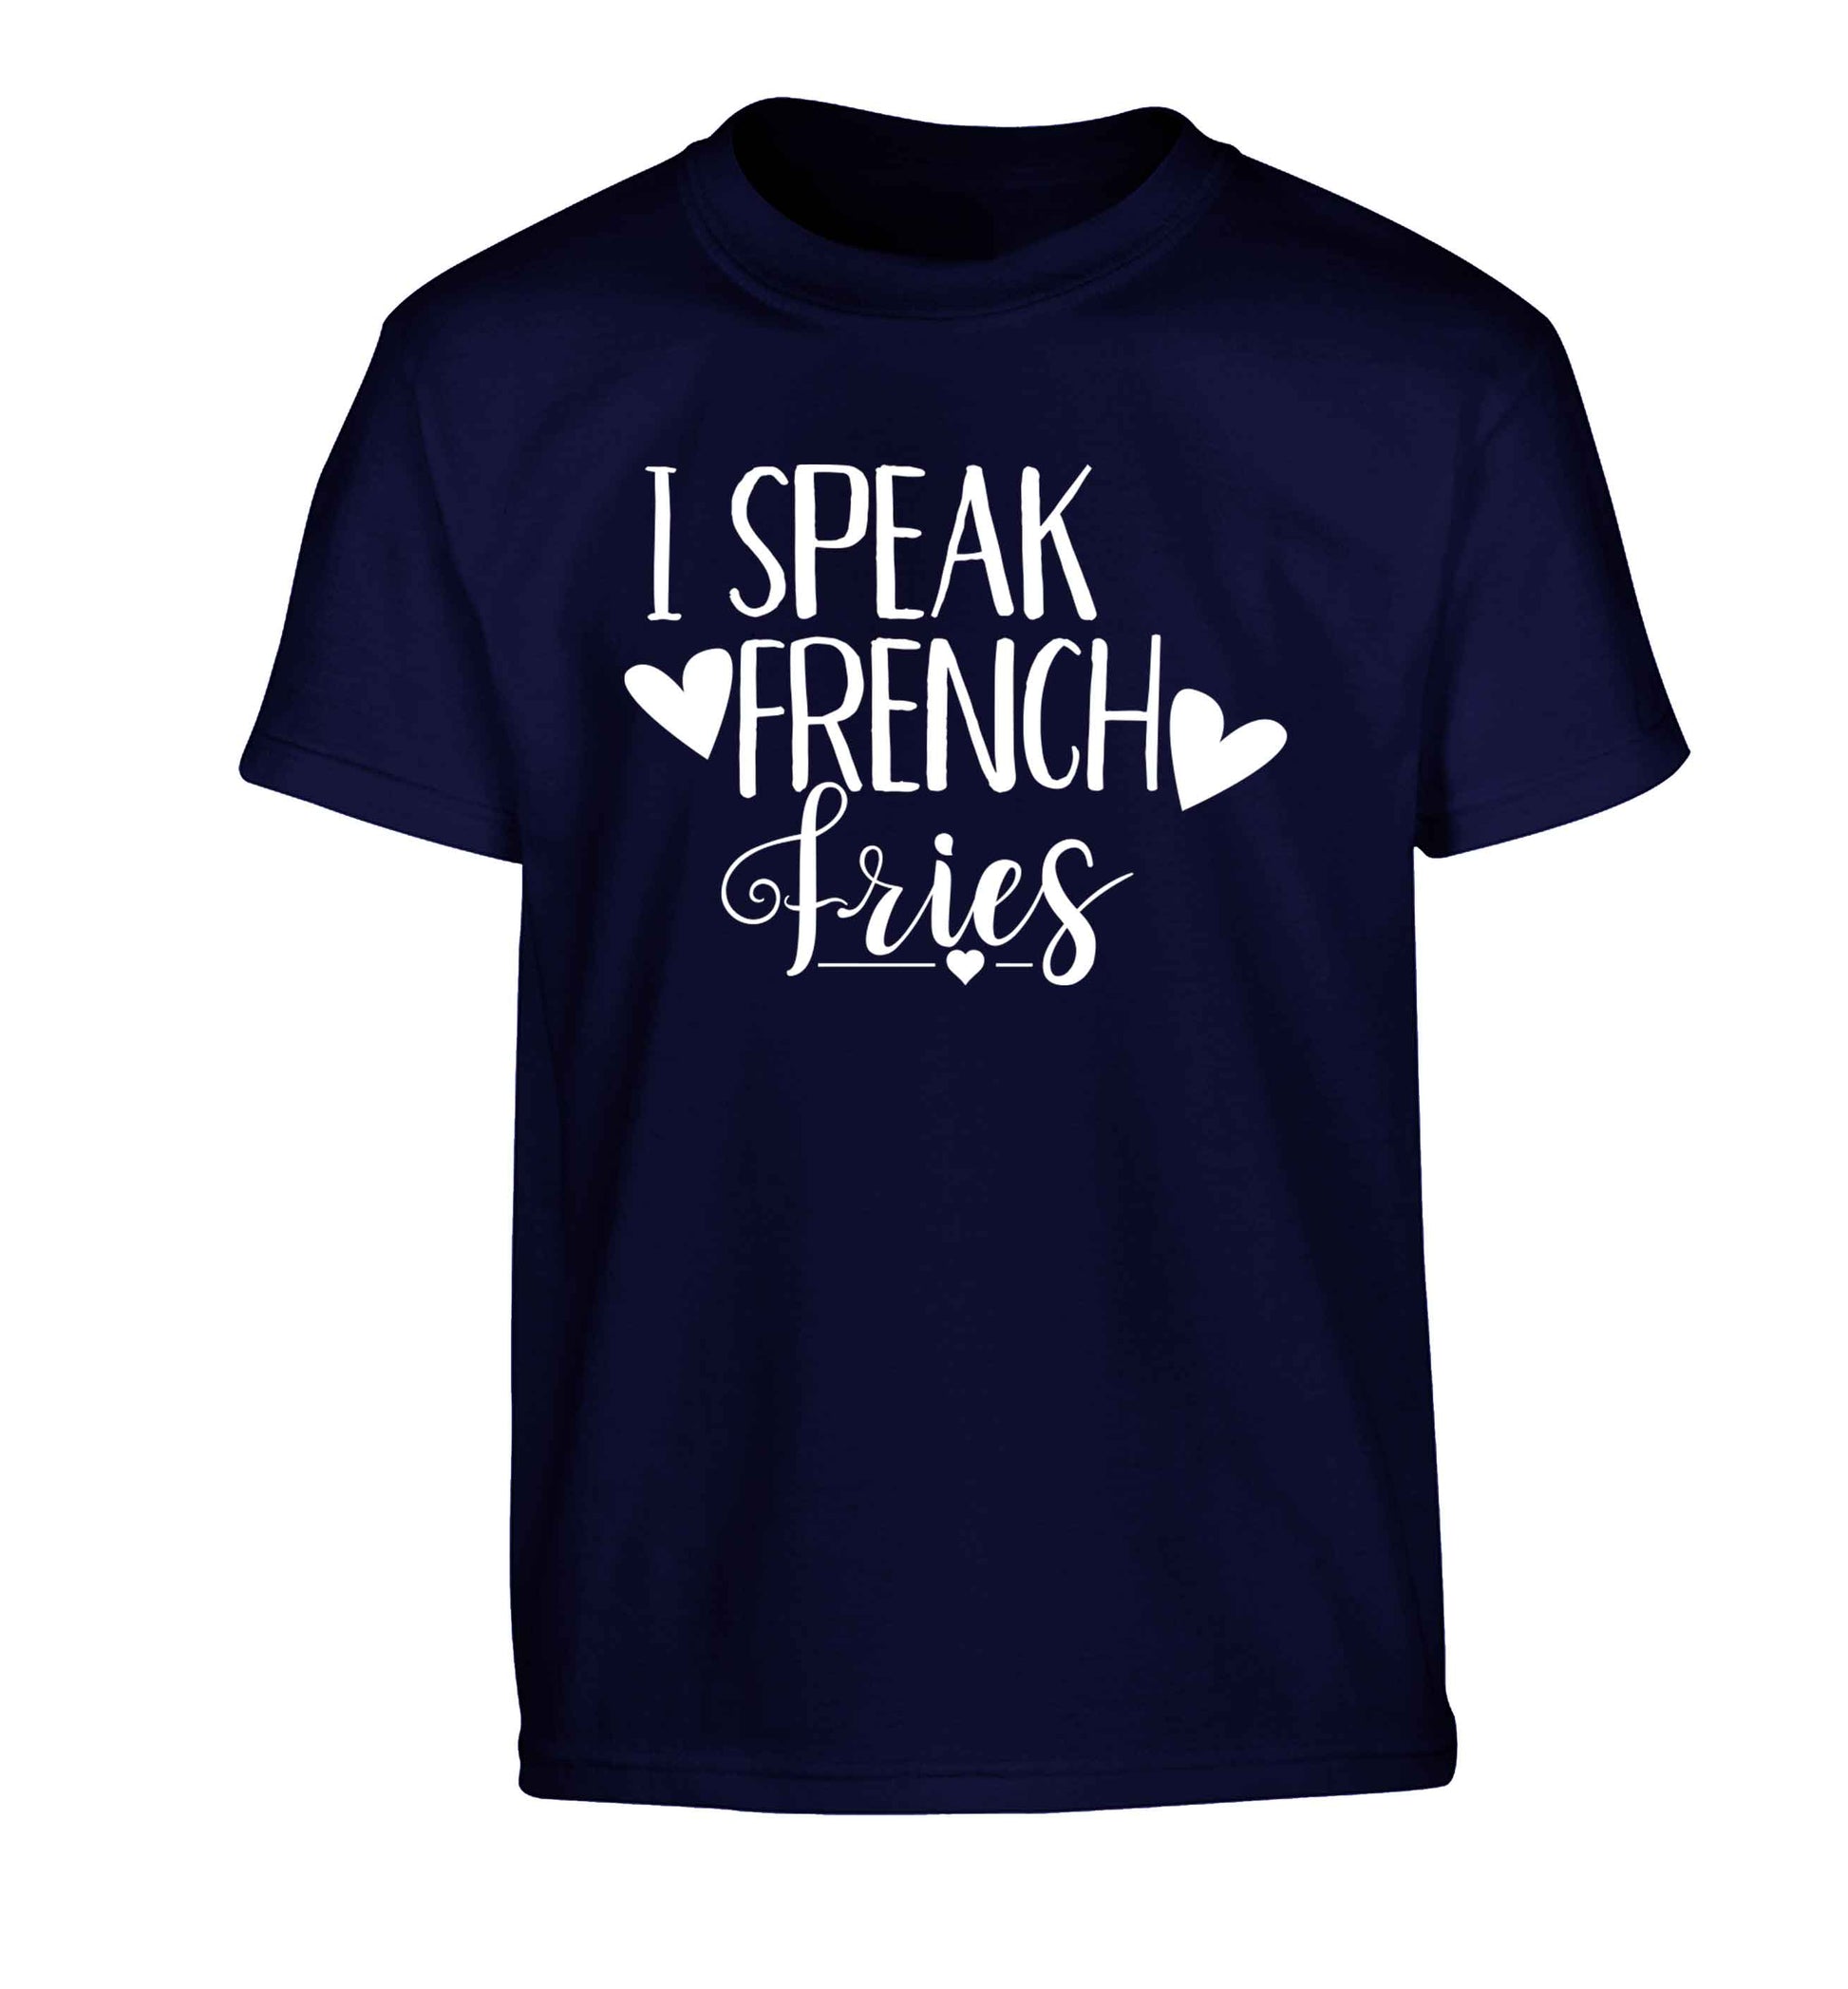 I speak French fries Children's navy Tshirt 12-13 Years